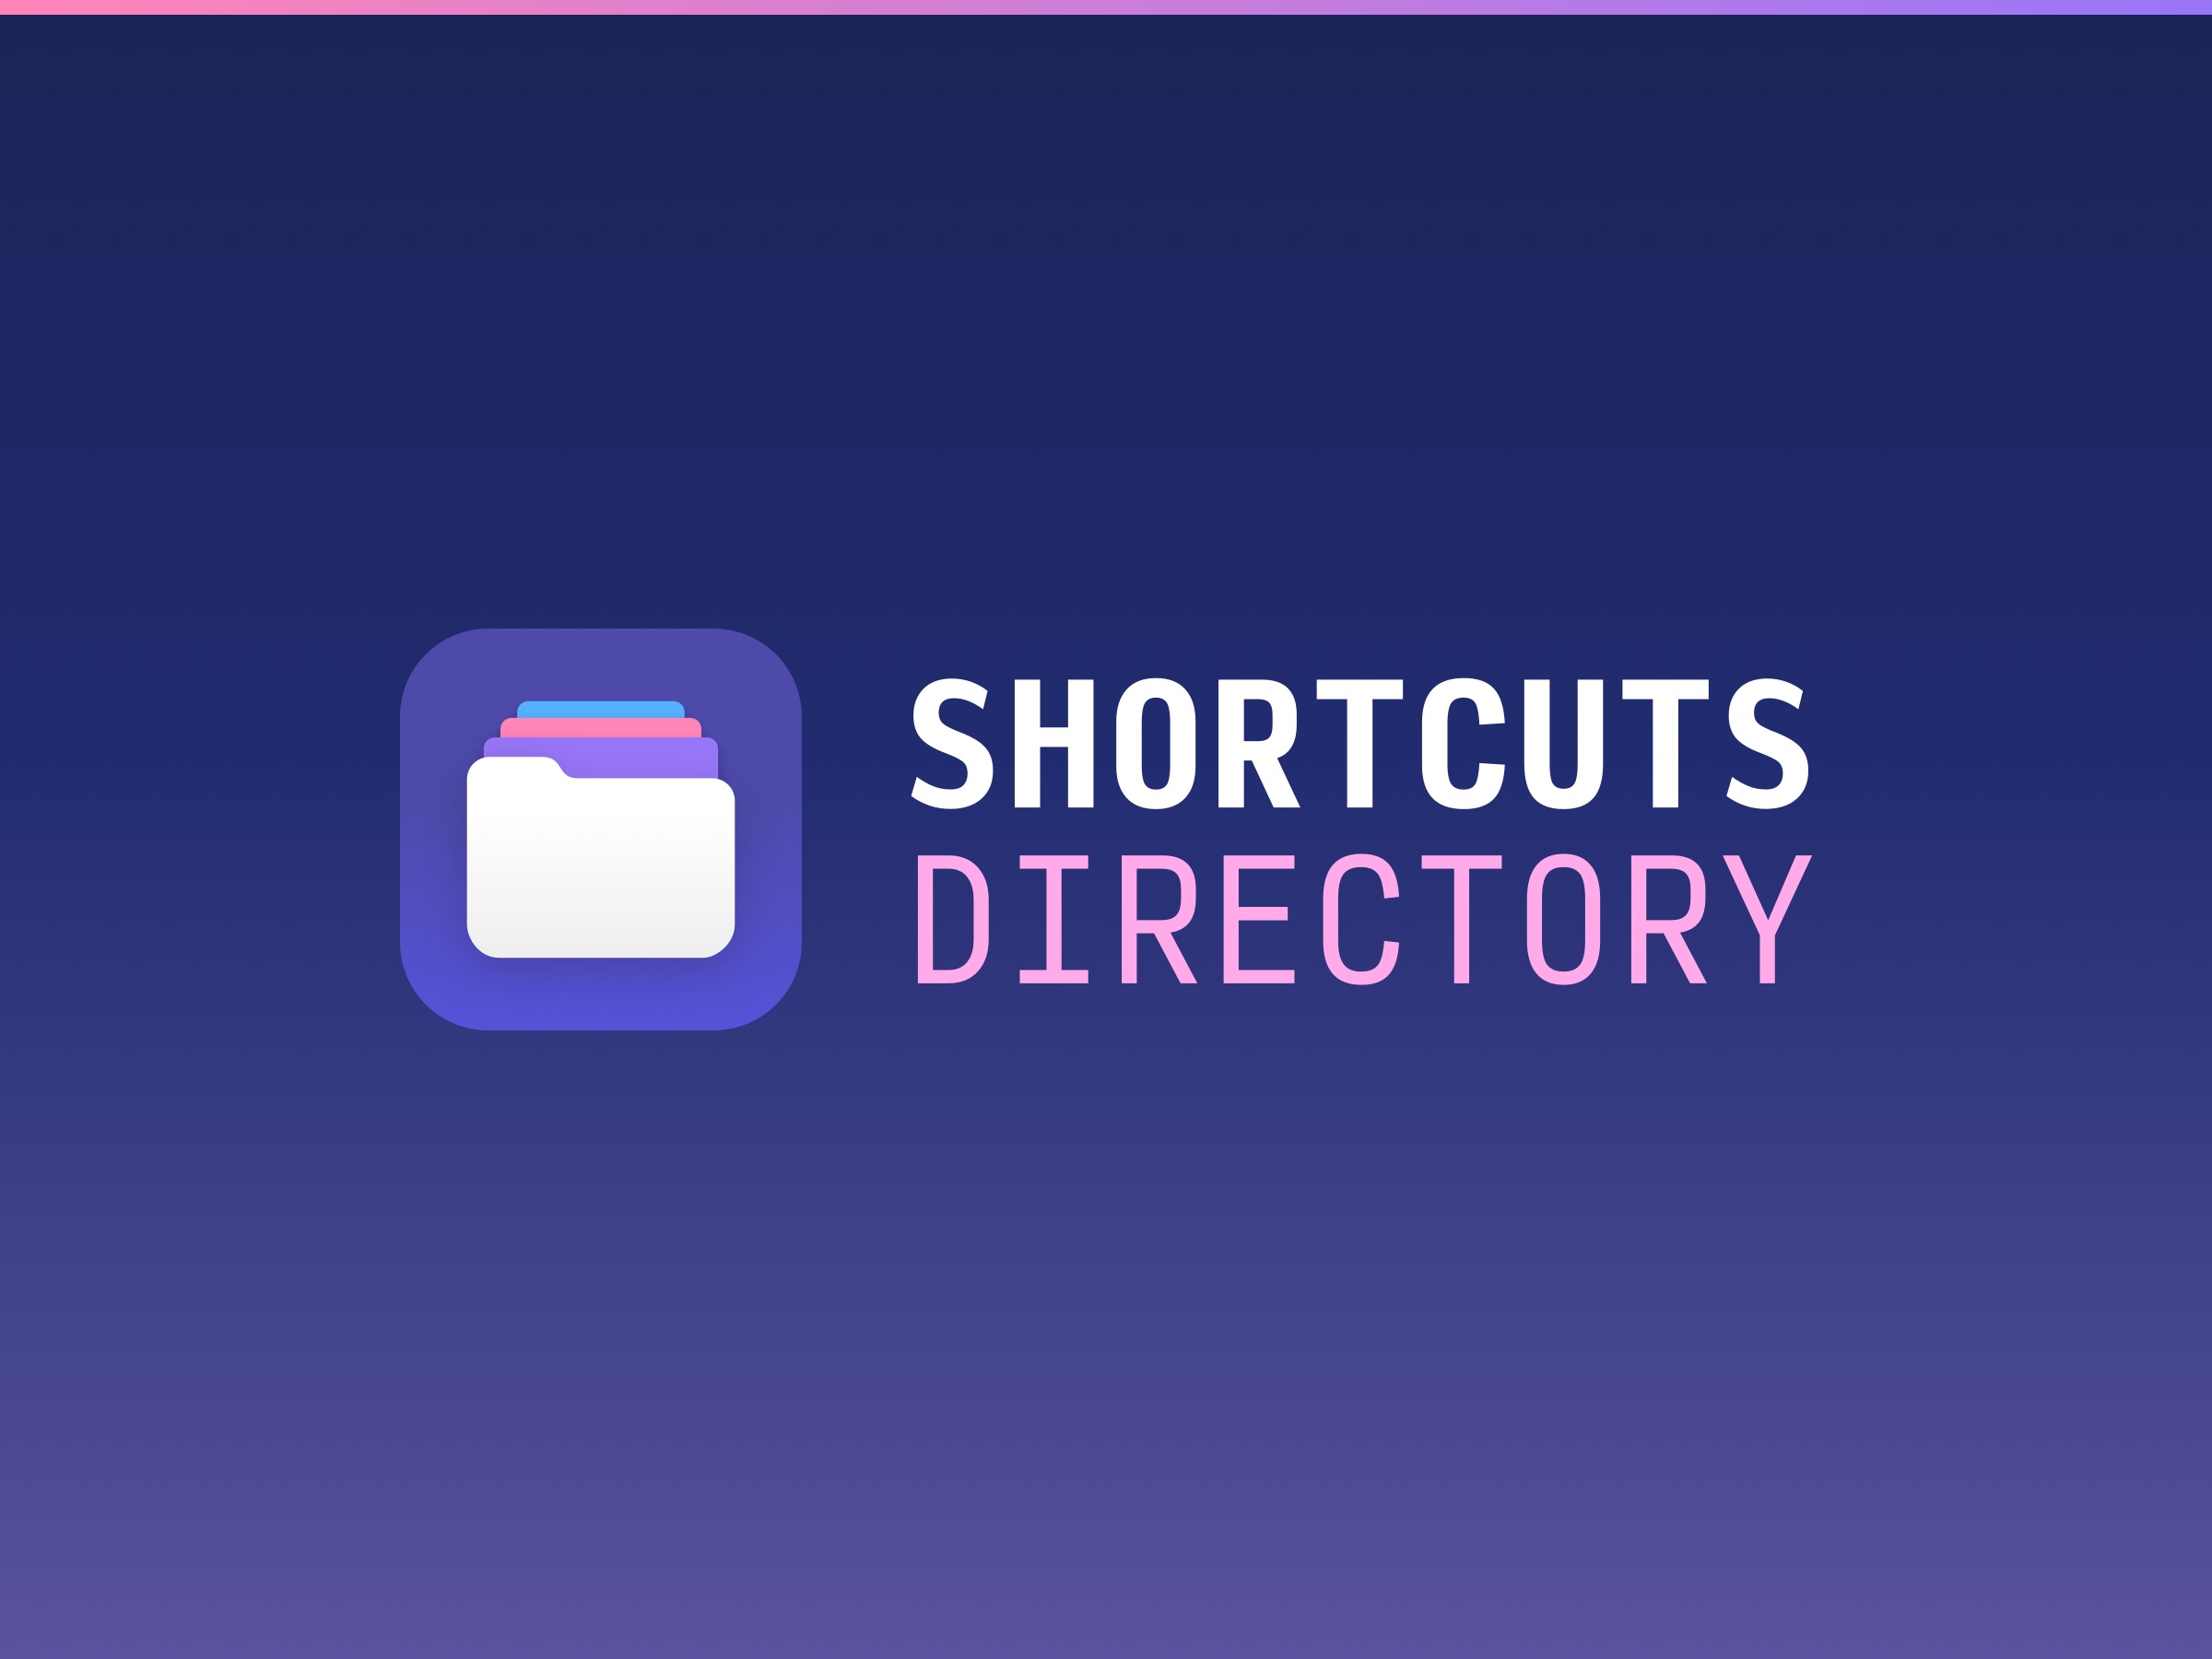 Shortcuts Directory logo